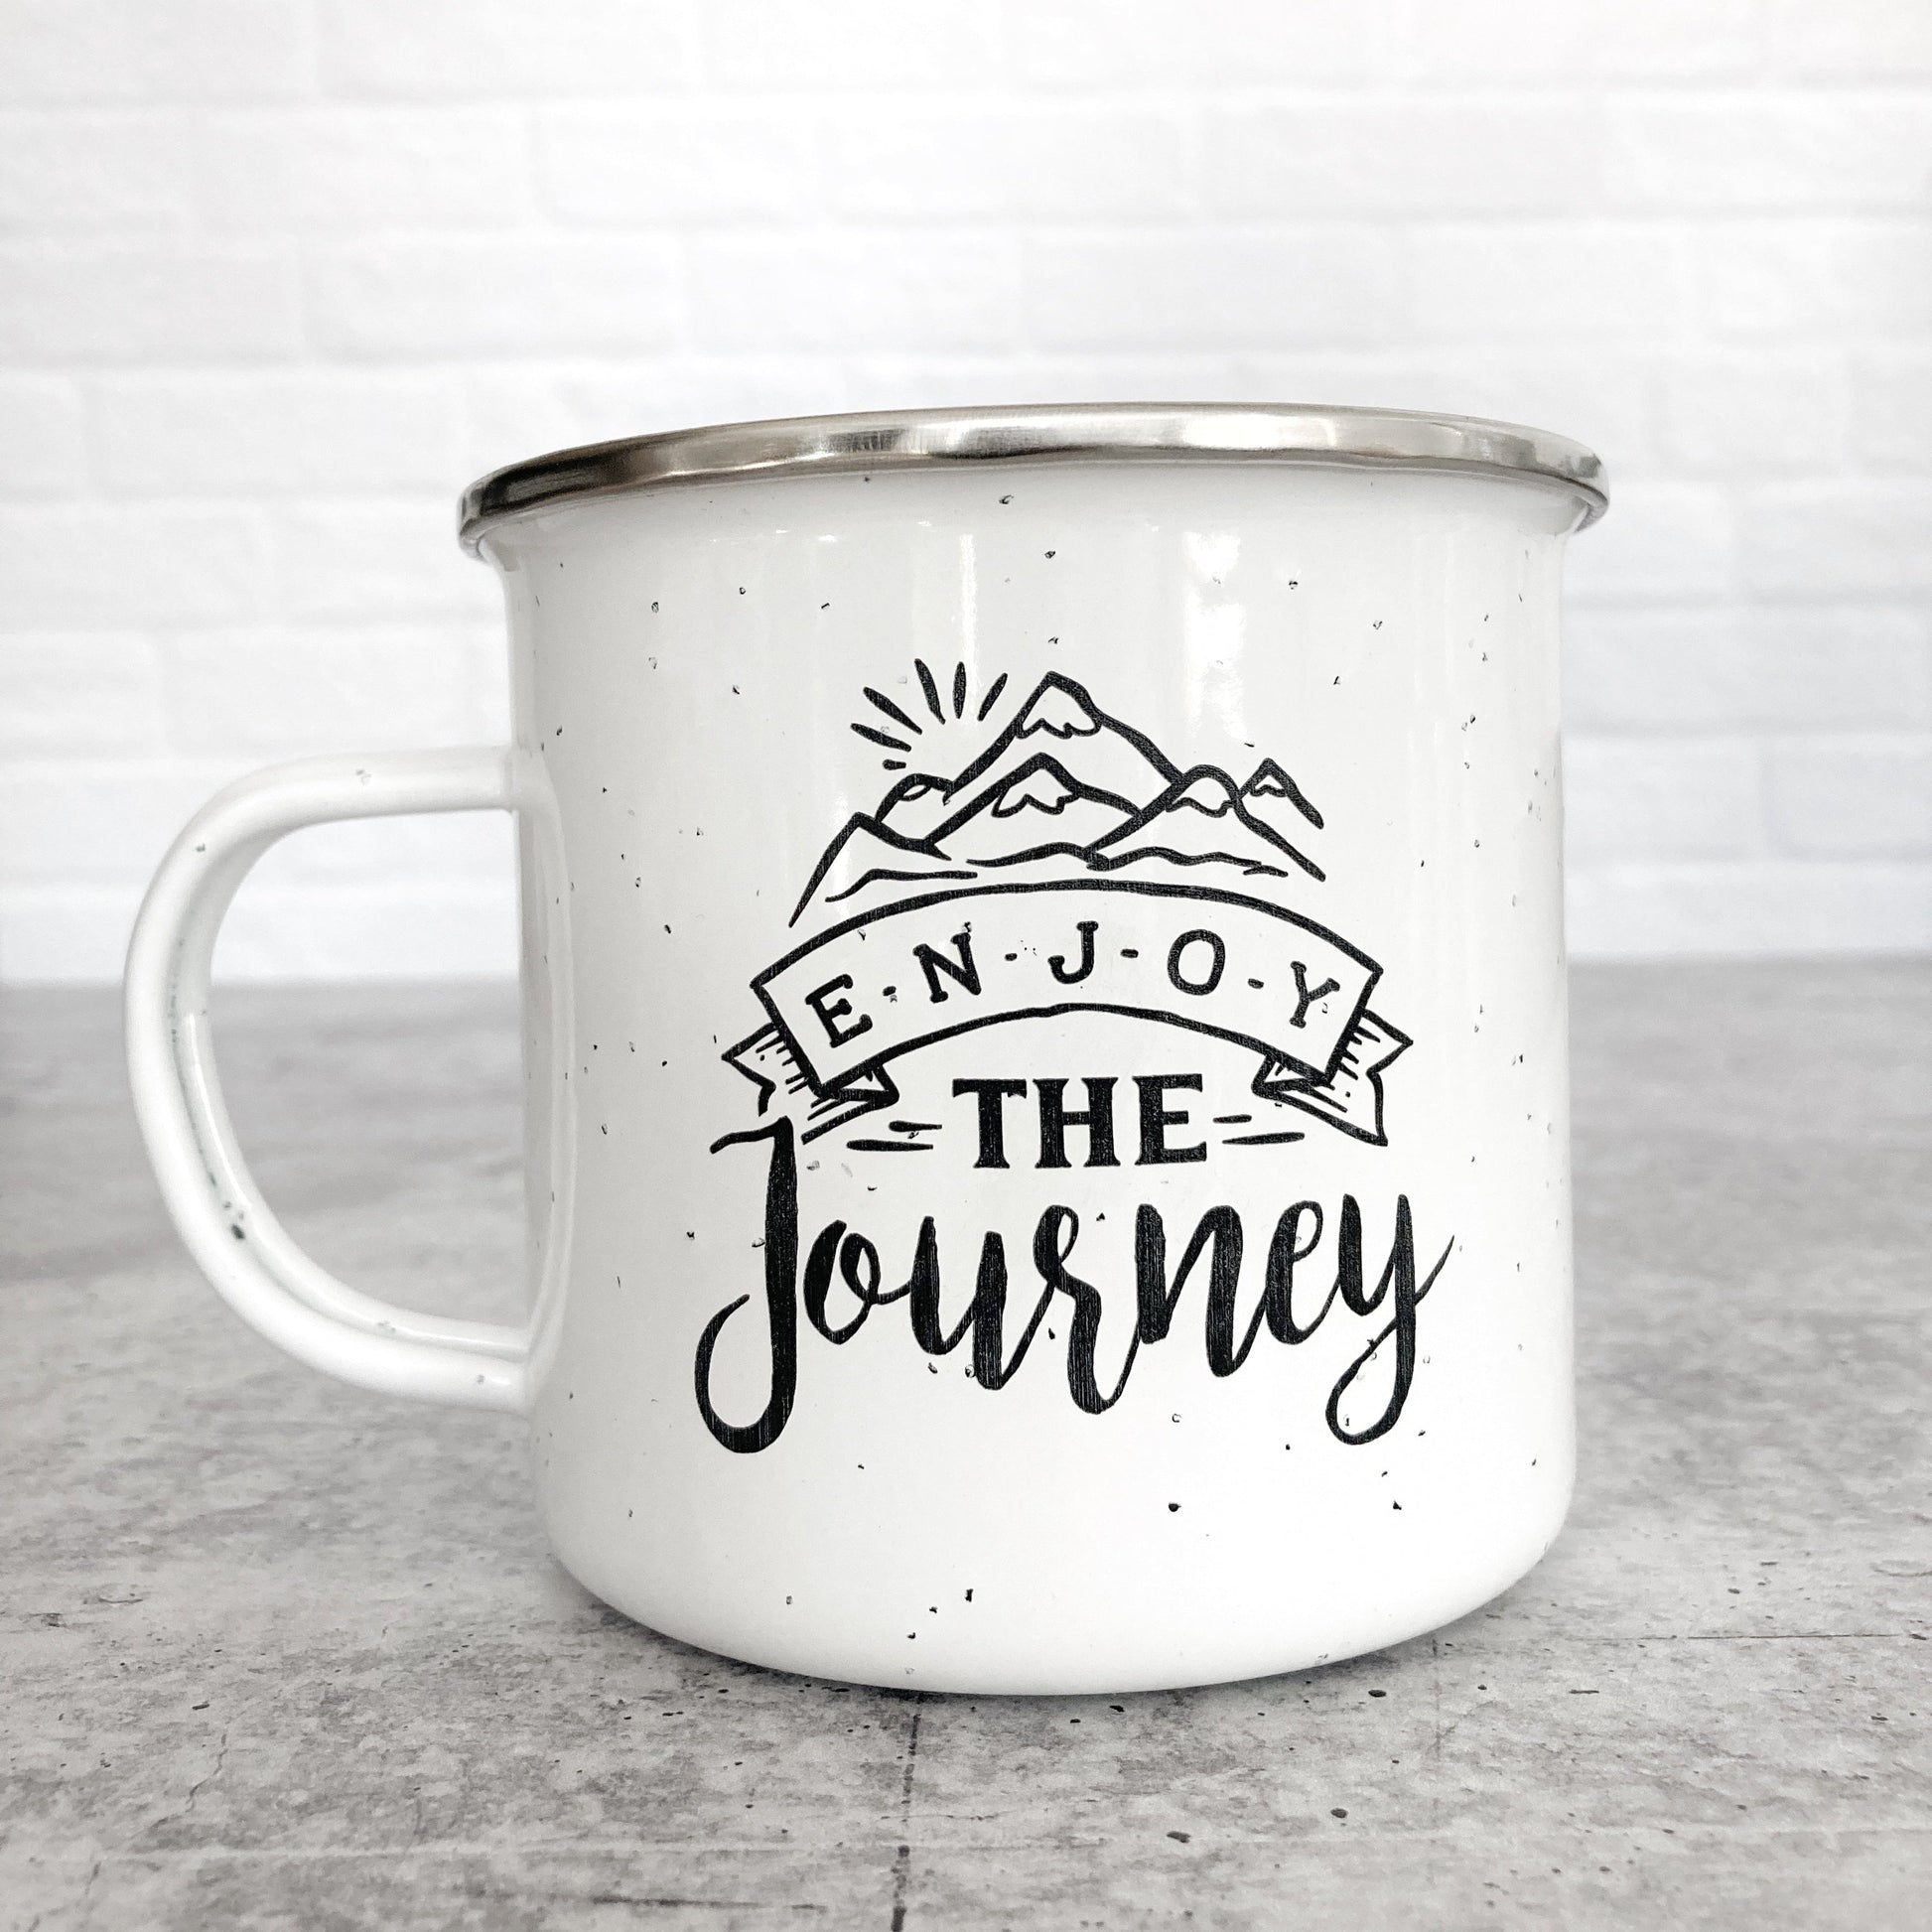 Enjoy the journey design on a white enamel mug